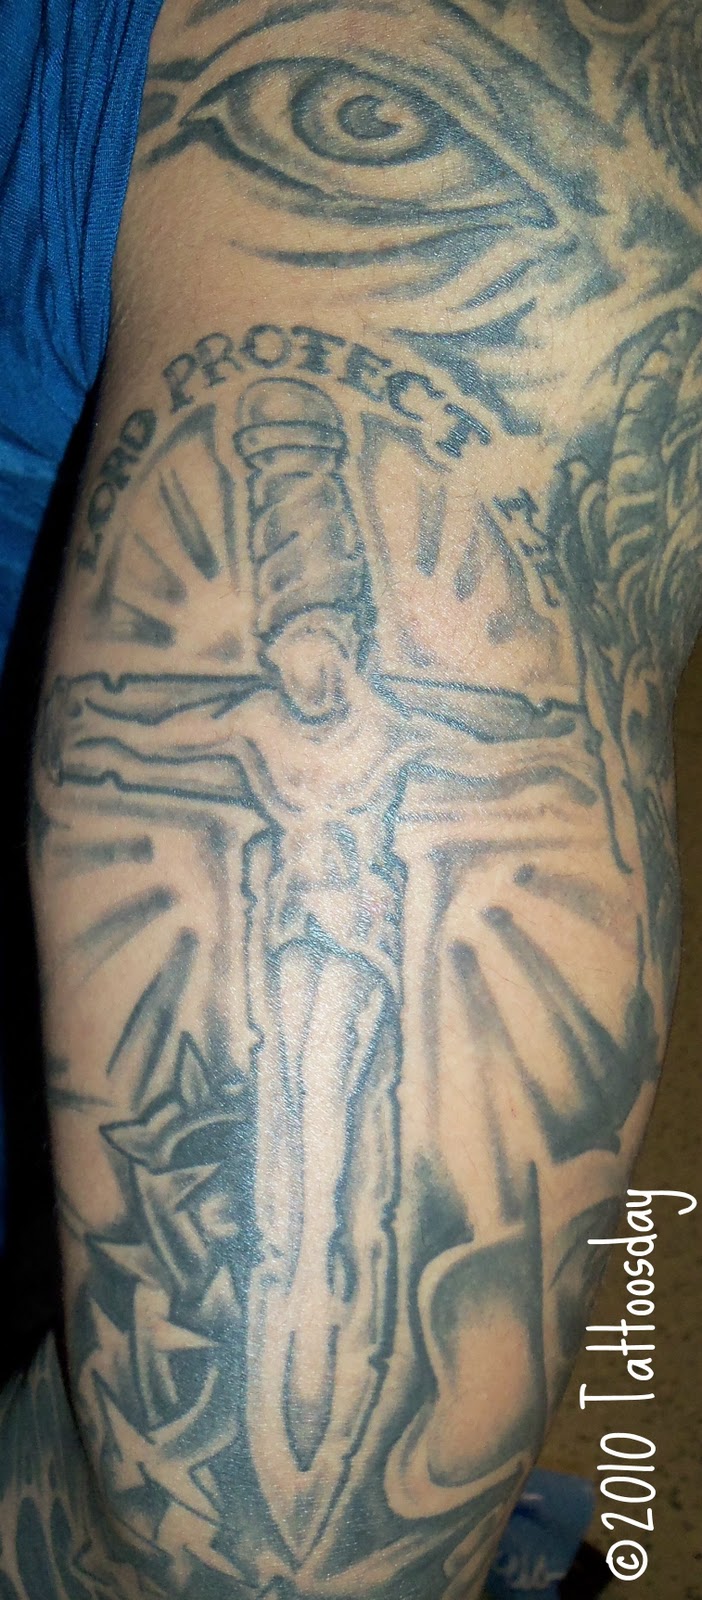 E13: Can Catholics Get Tattoos? - YouTube